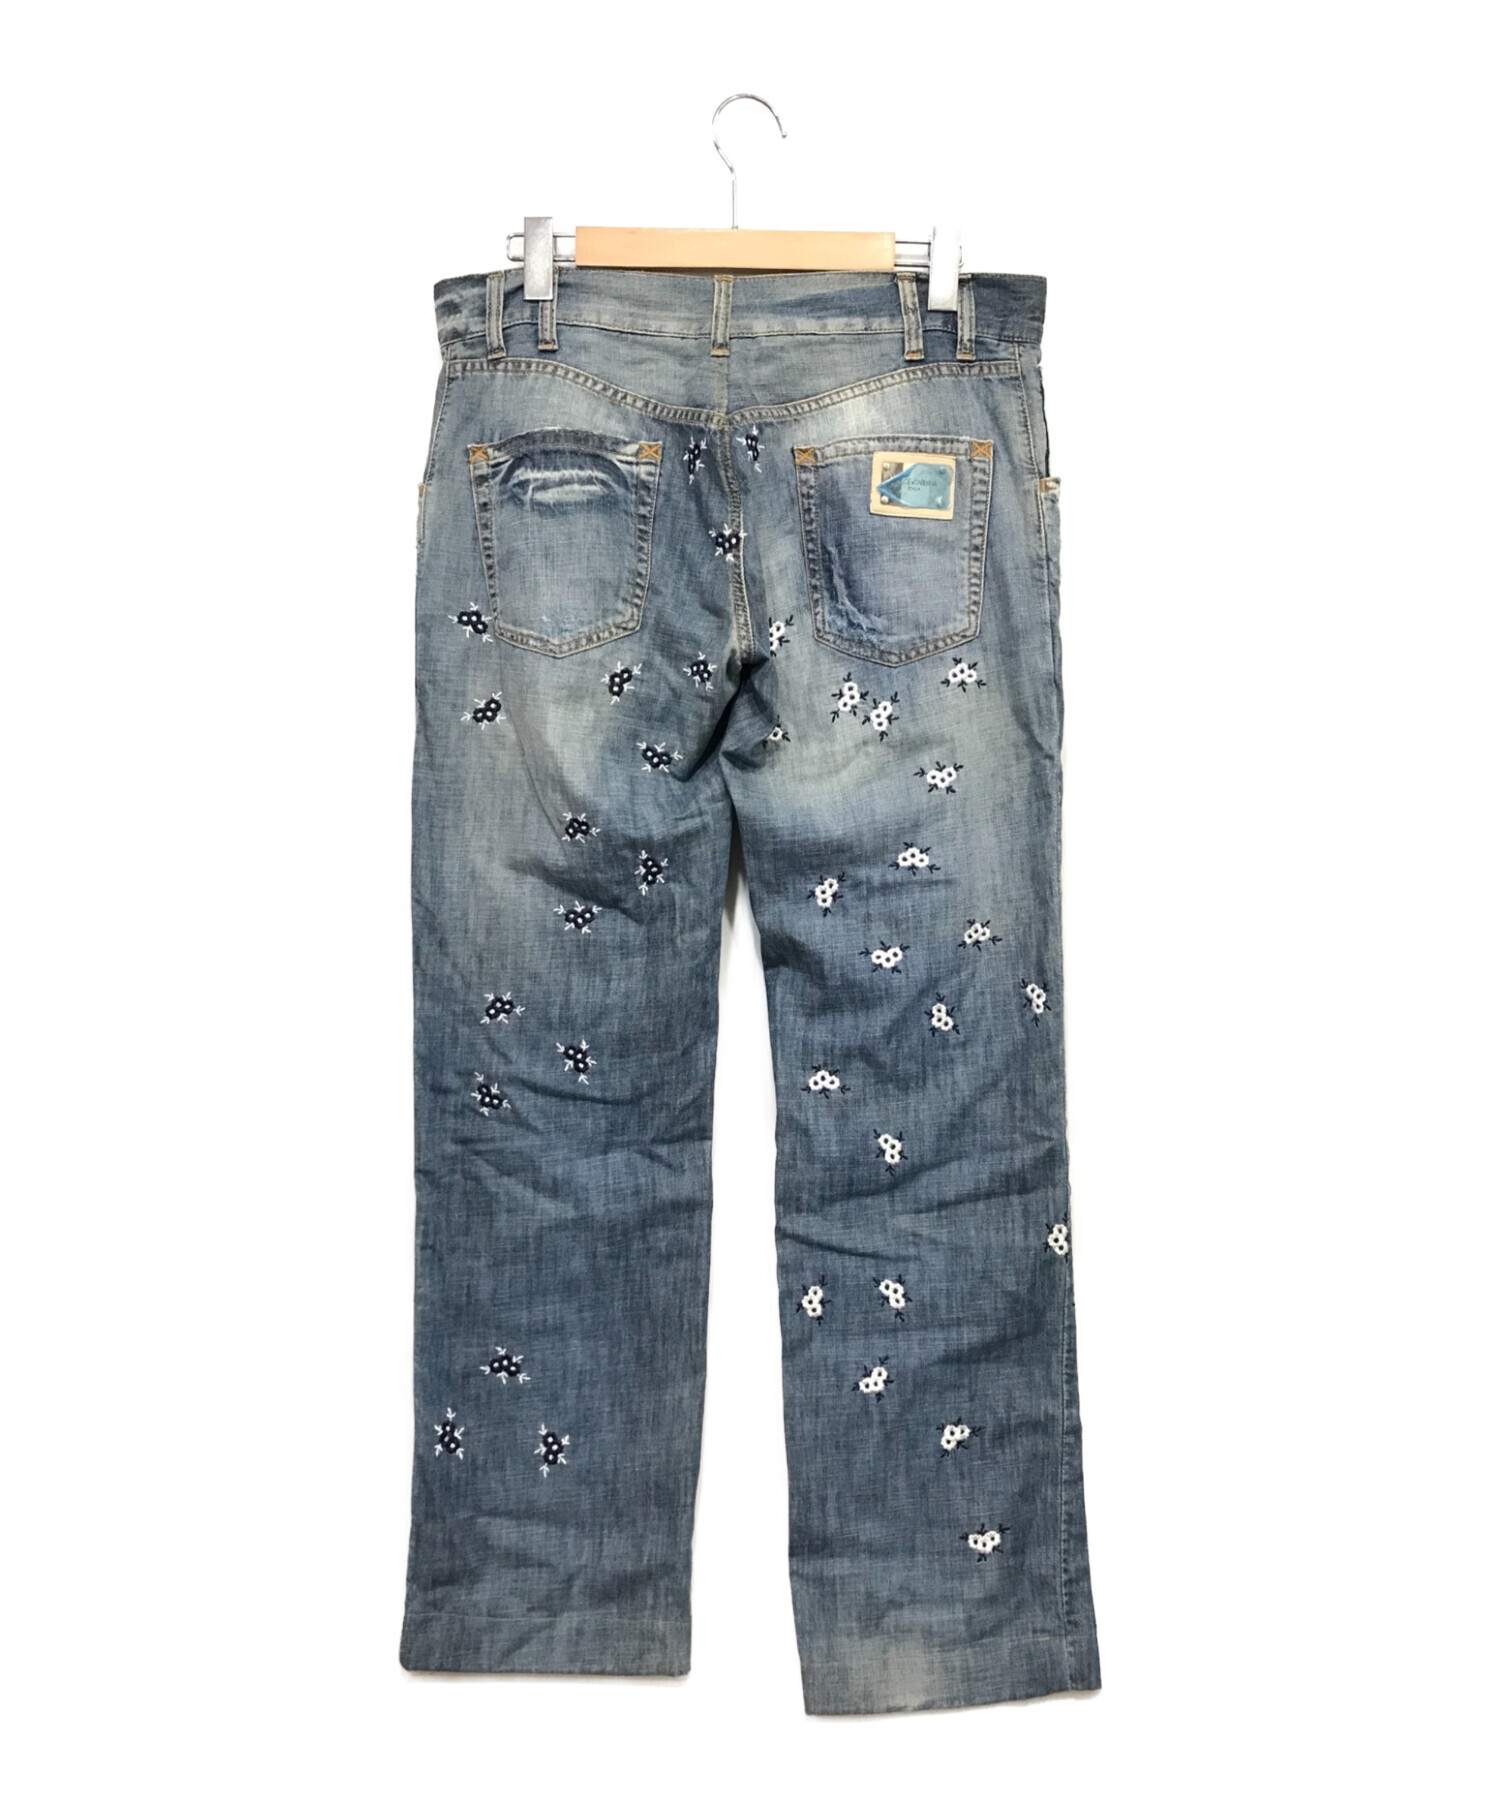 ③Nautica Jeans 38新品未使用品